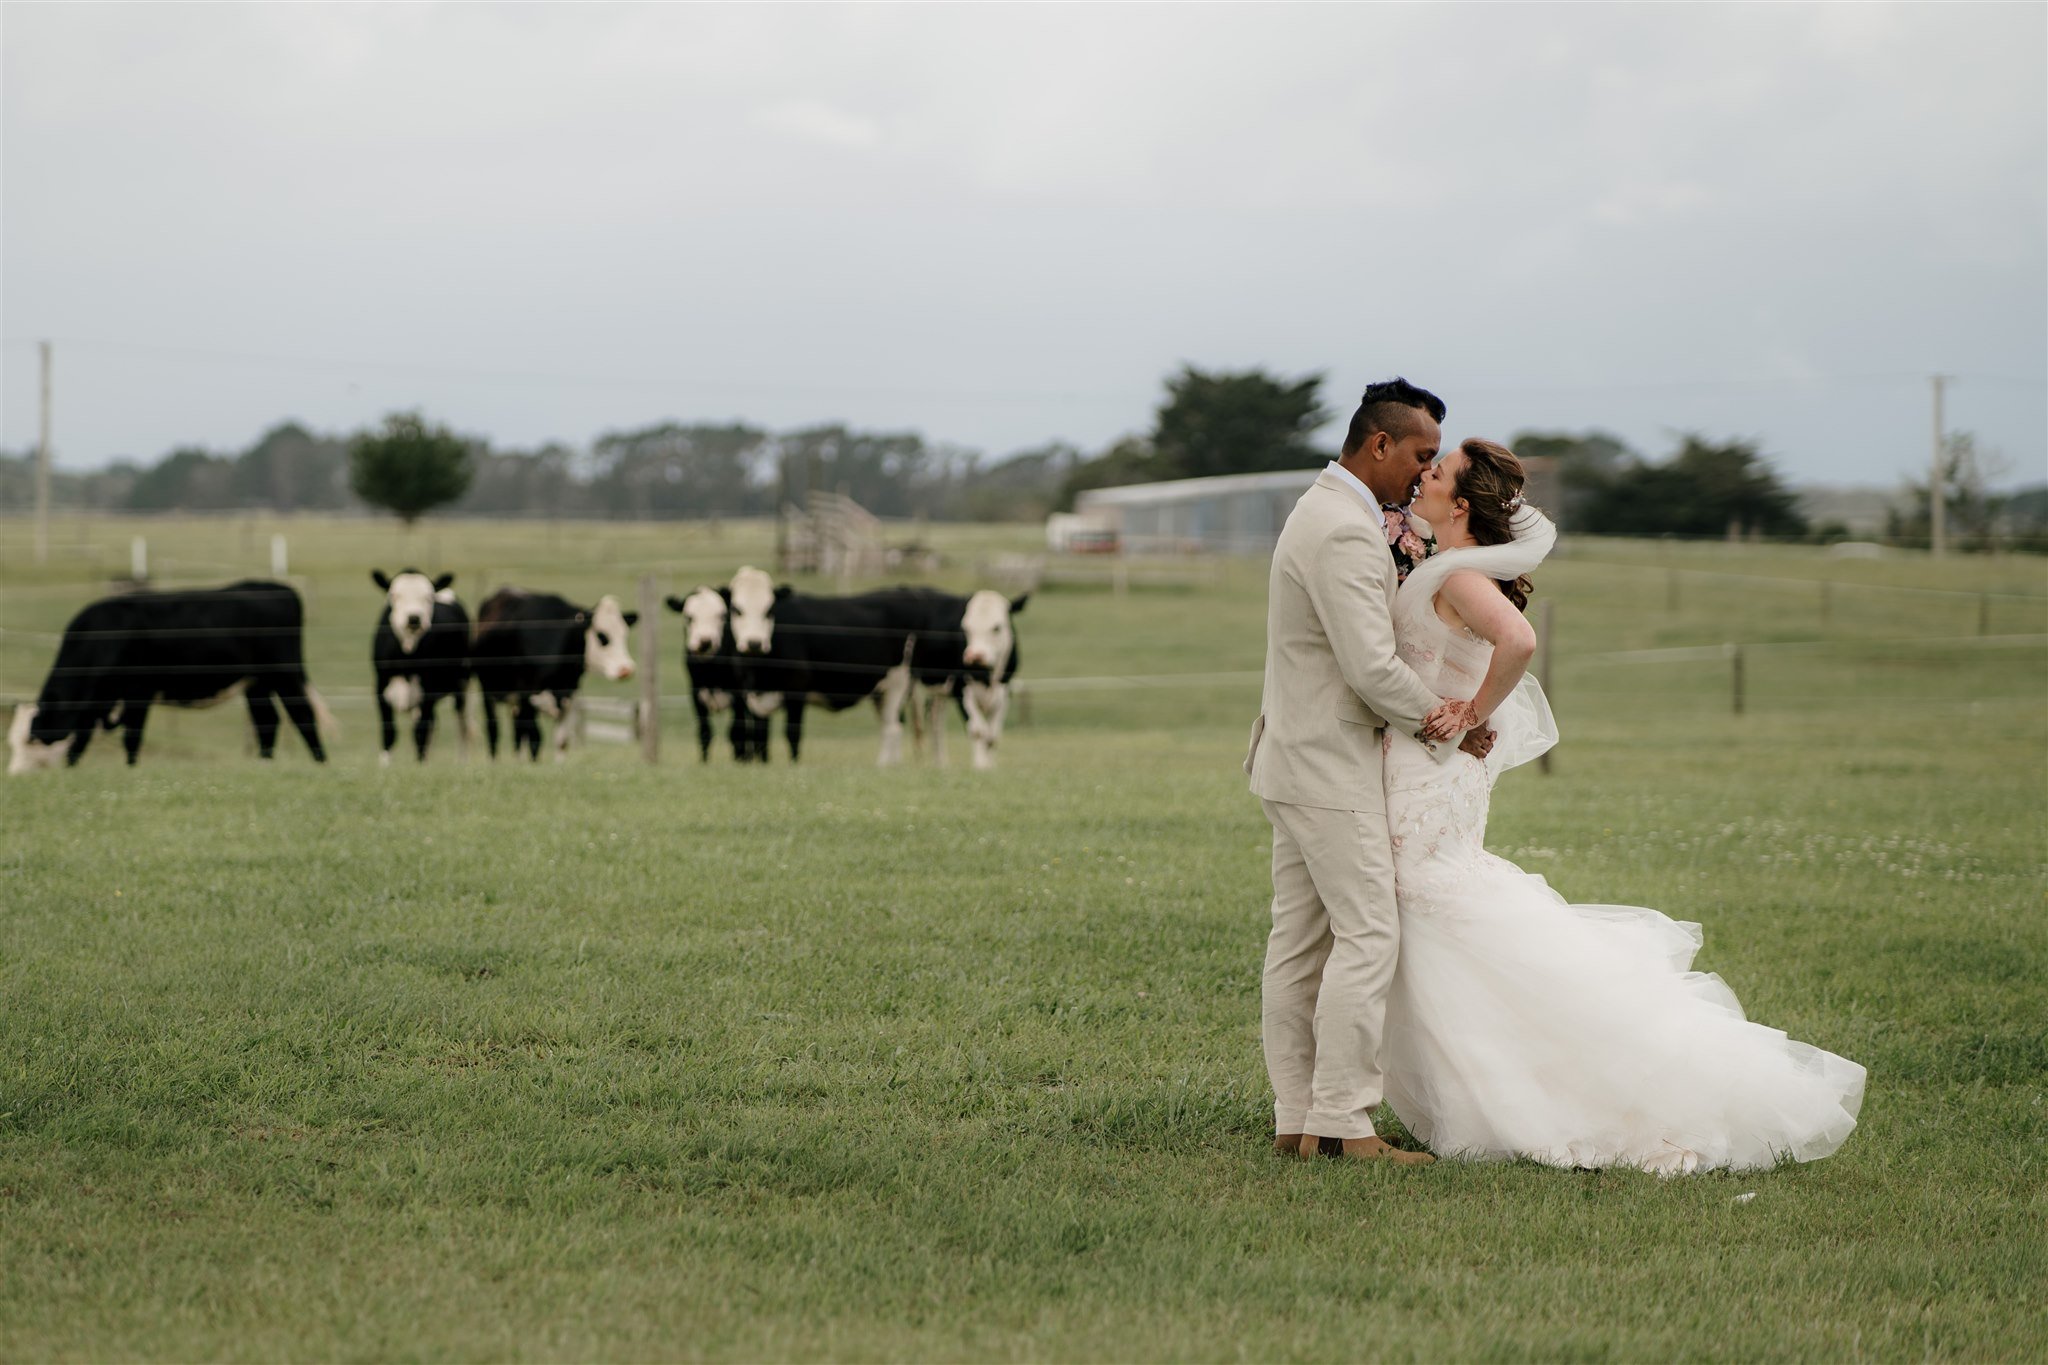 auckland-wedding-photographer-videographer-venue-diy-ceremony-reception-dear-white-productions-farm-backyard (26).jpg